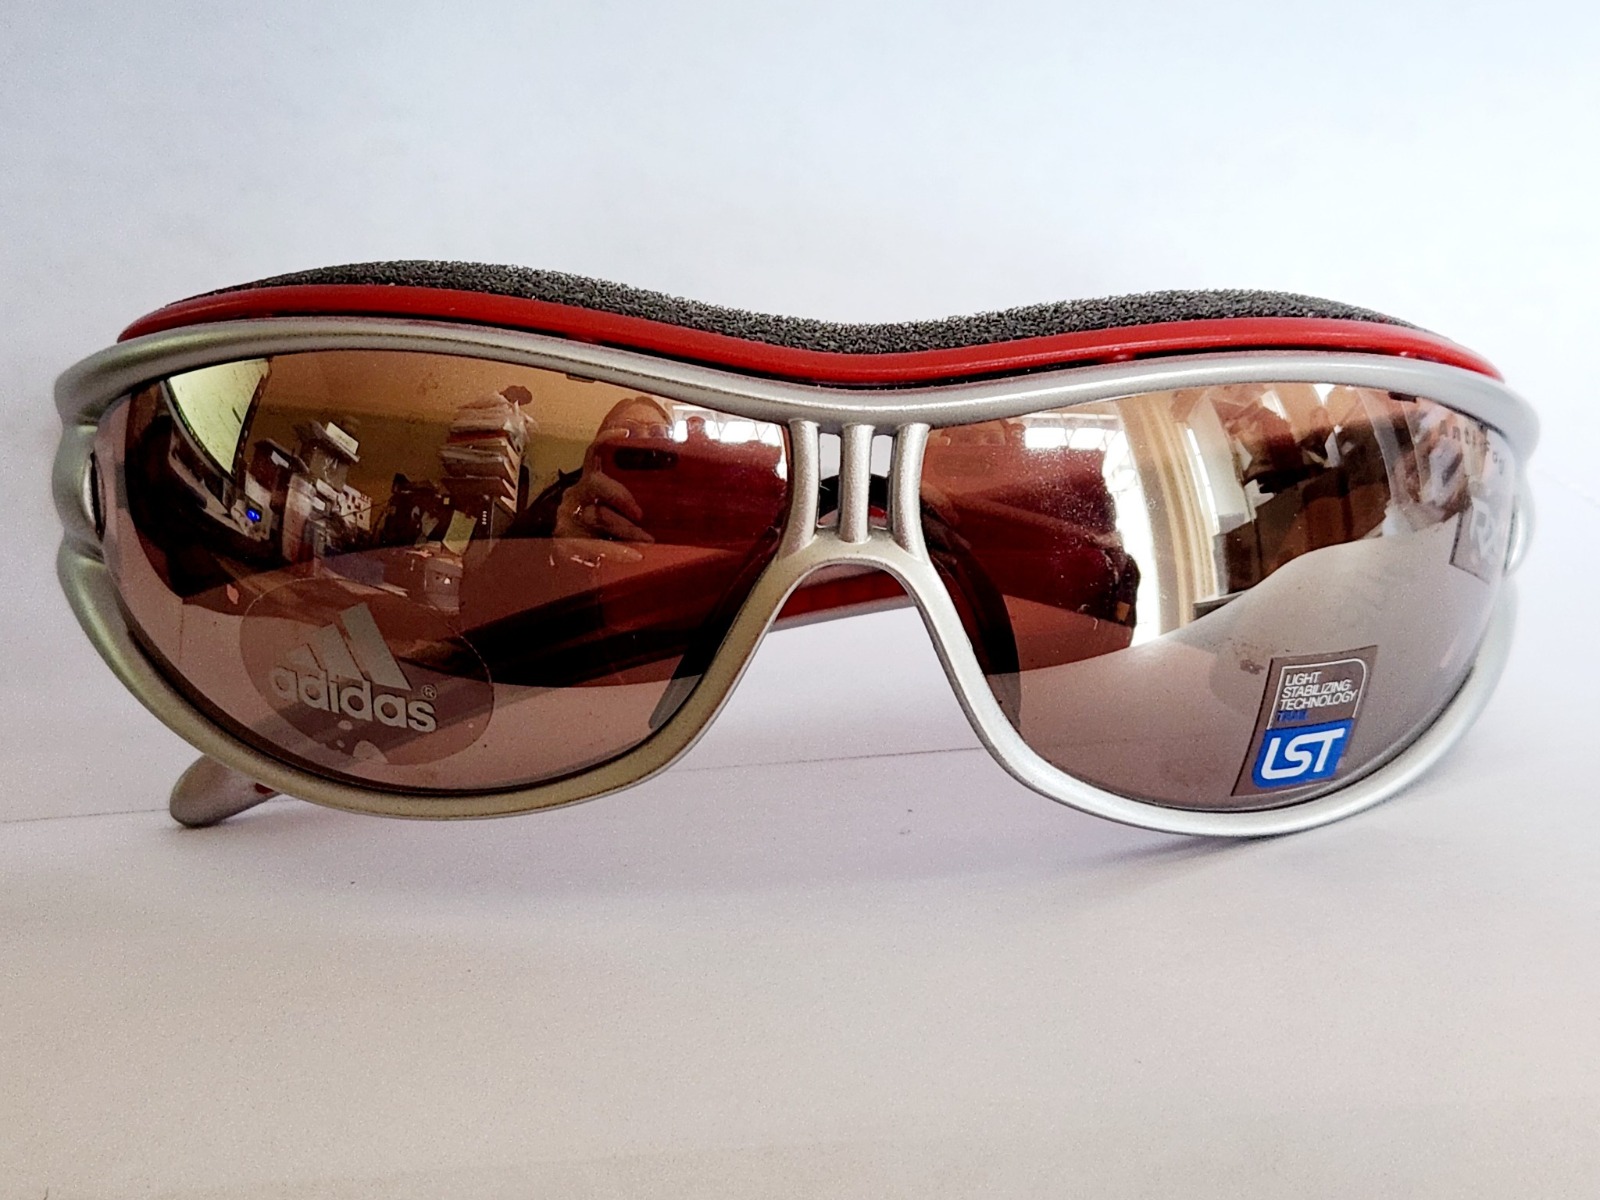 Adidas Evil Eye Sunglasses güneş gözlüğü at sahibinden.com - 1109713200